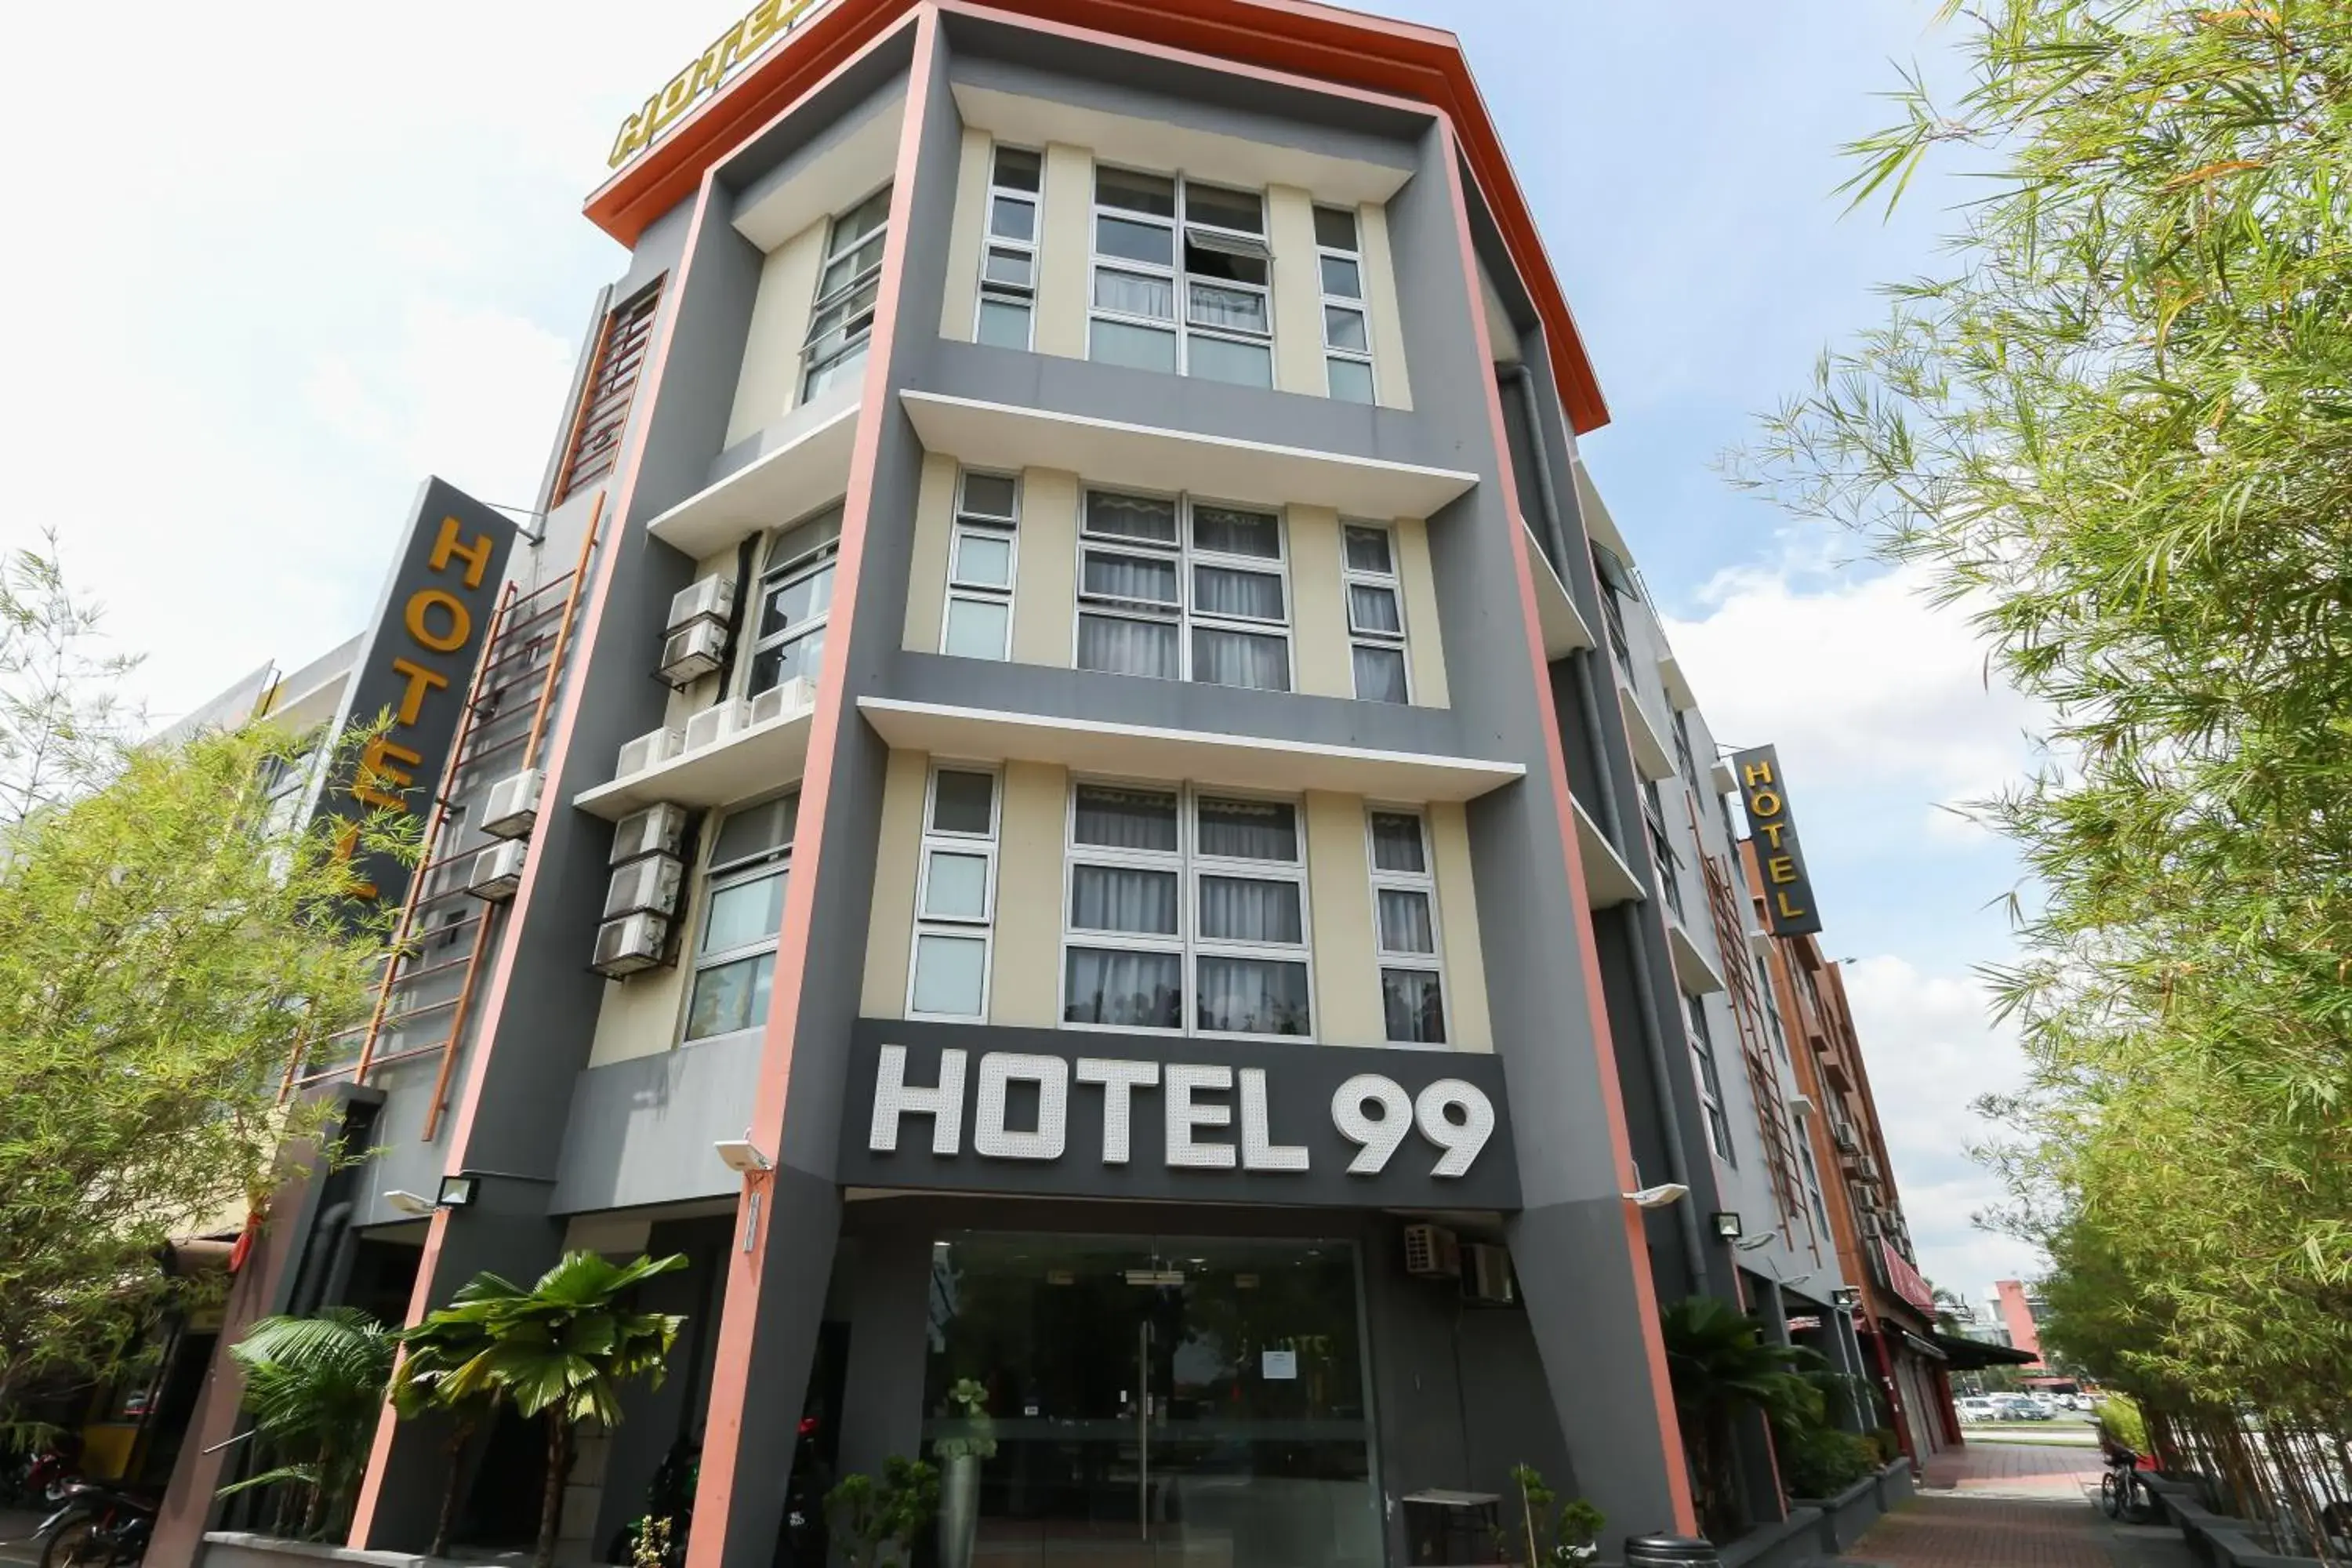 Property Building in Hotel 99 Botanik Klang